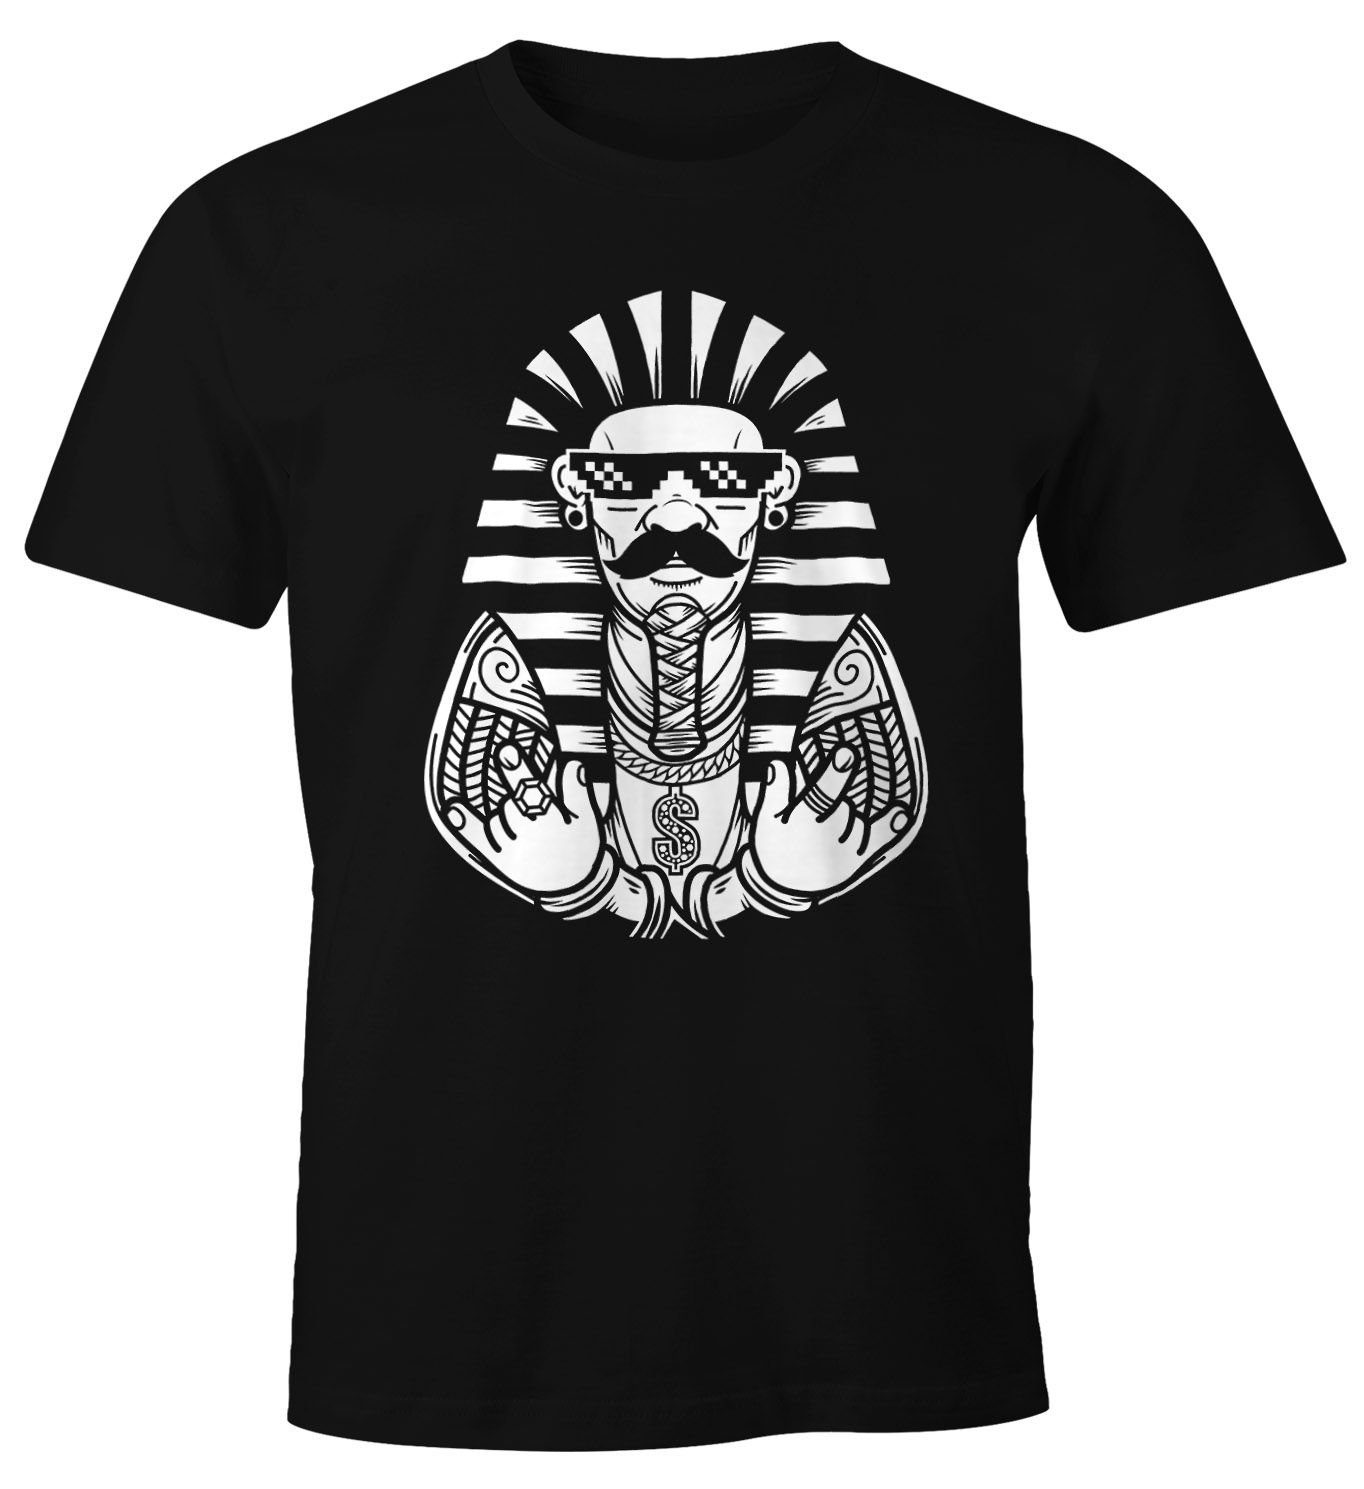 MoonWorks Print-Shirt Herren T-Shirt King Thug Gangster Life Fun-Shirt mit Print